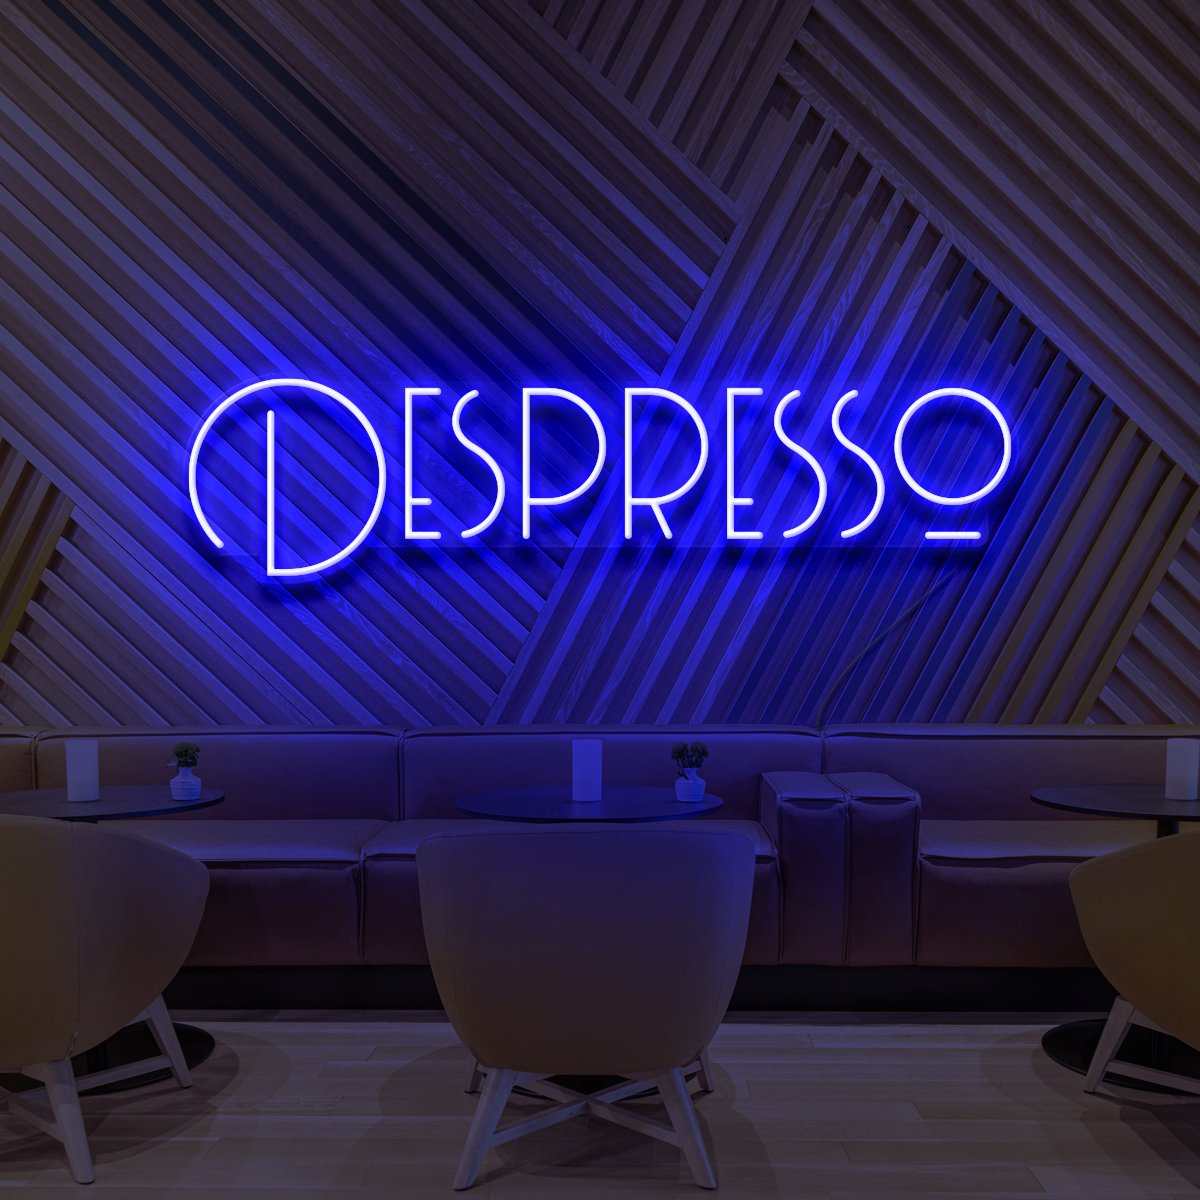 "Despresso" Neon Sign for Cafés 60cm (2ft) / Blue / LED Neon by Neon Icons